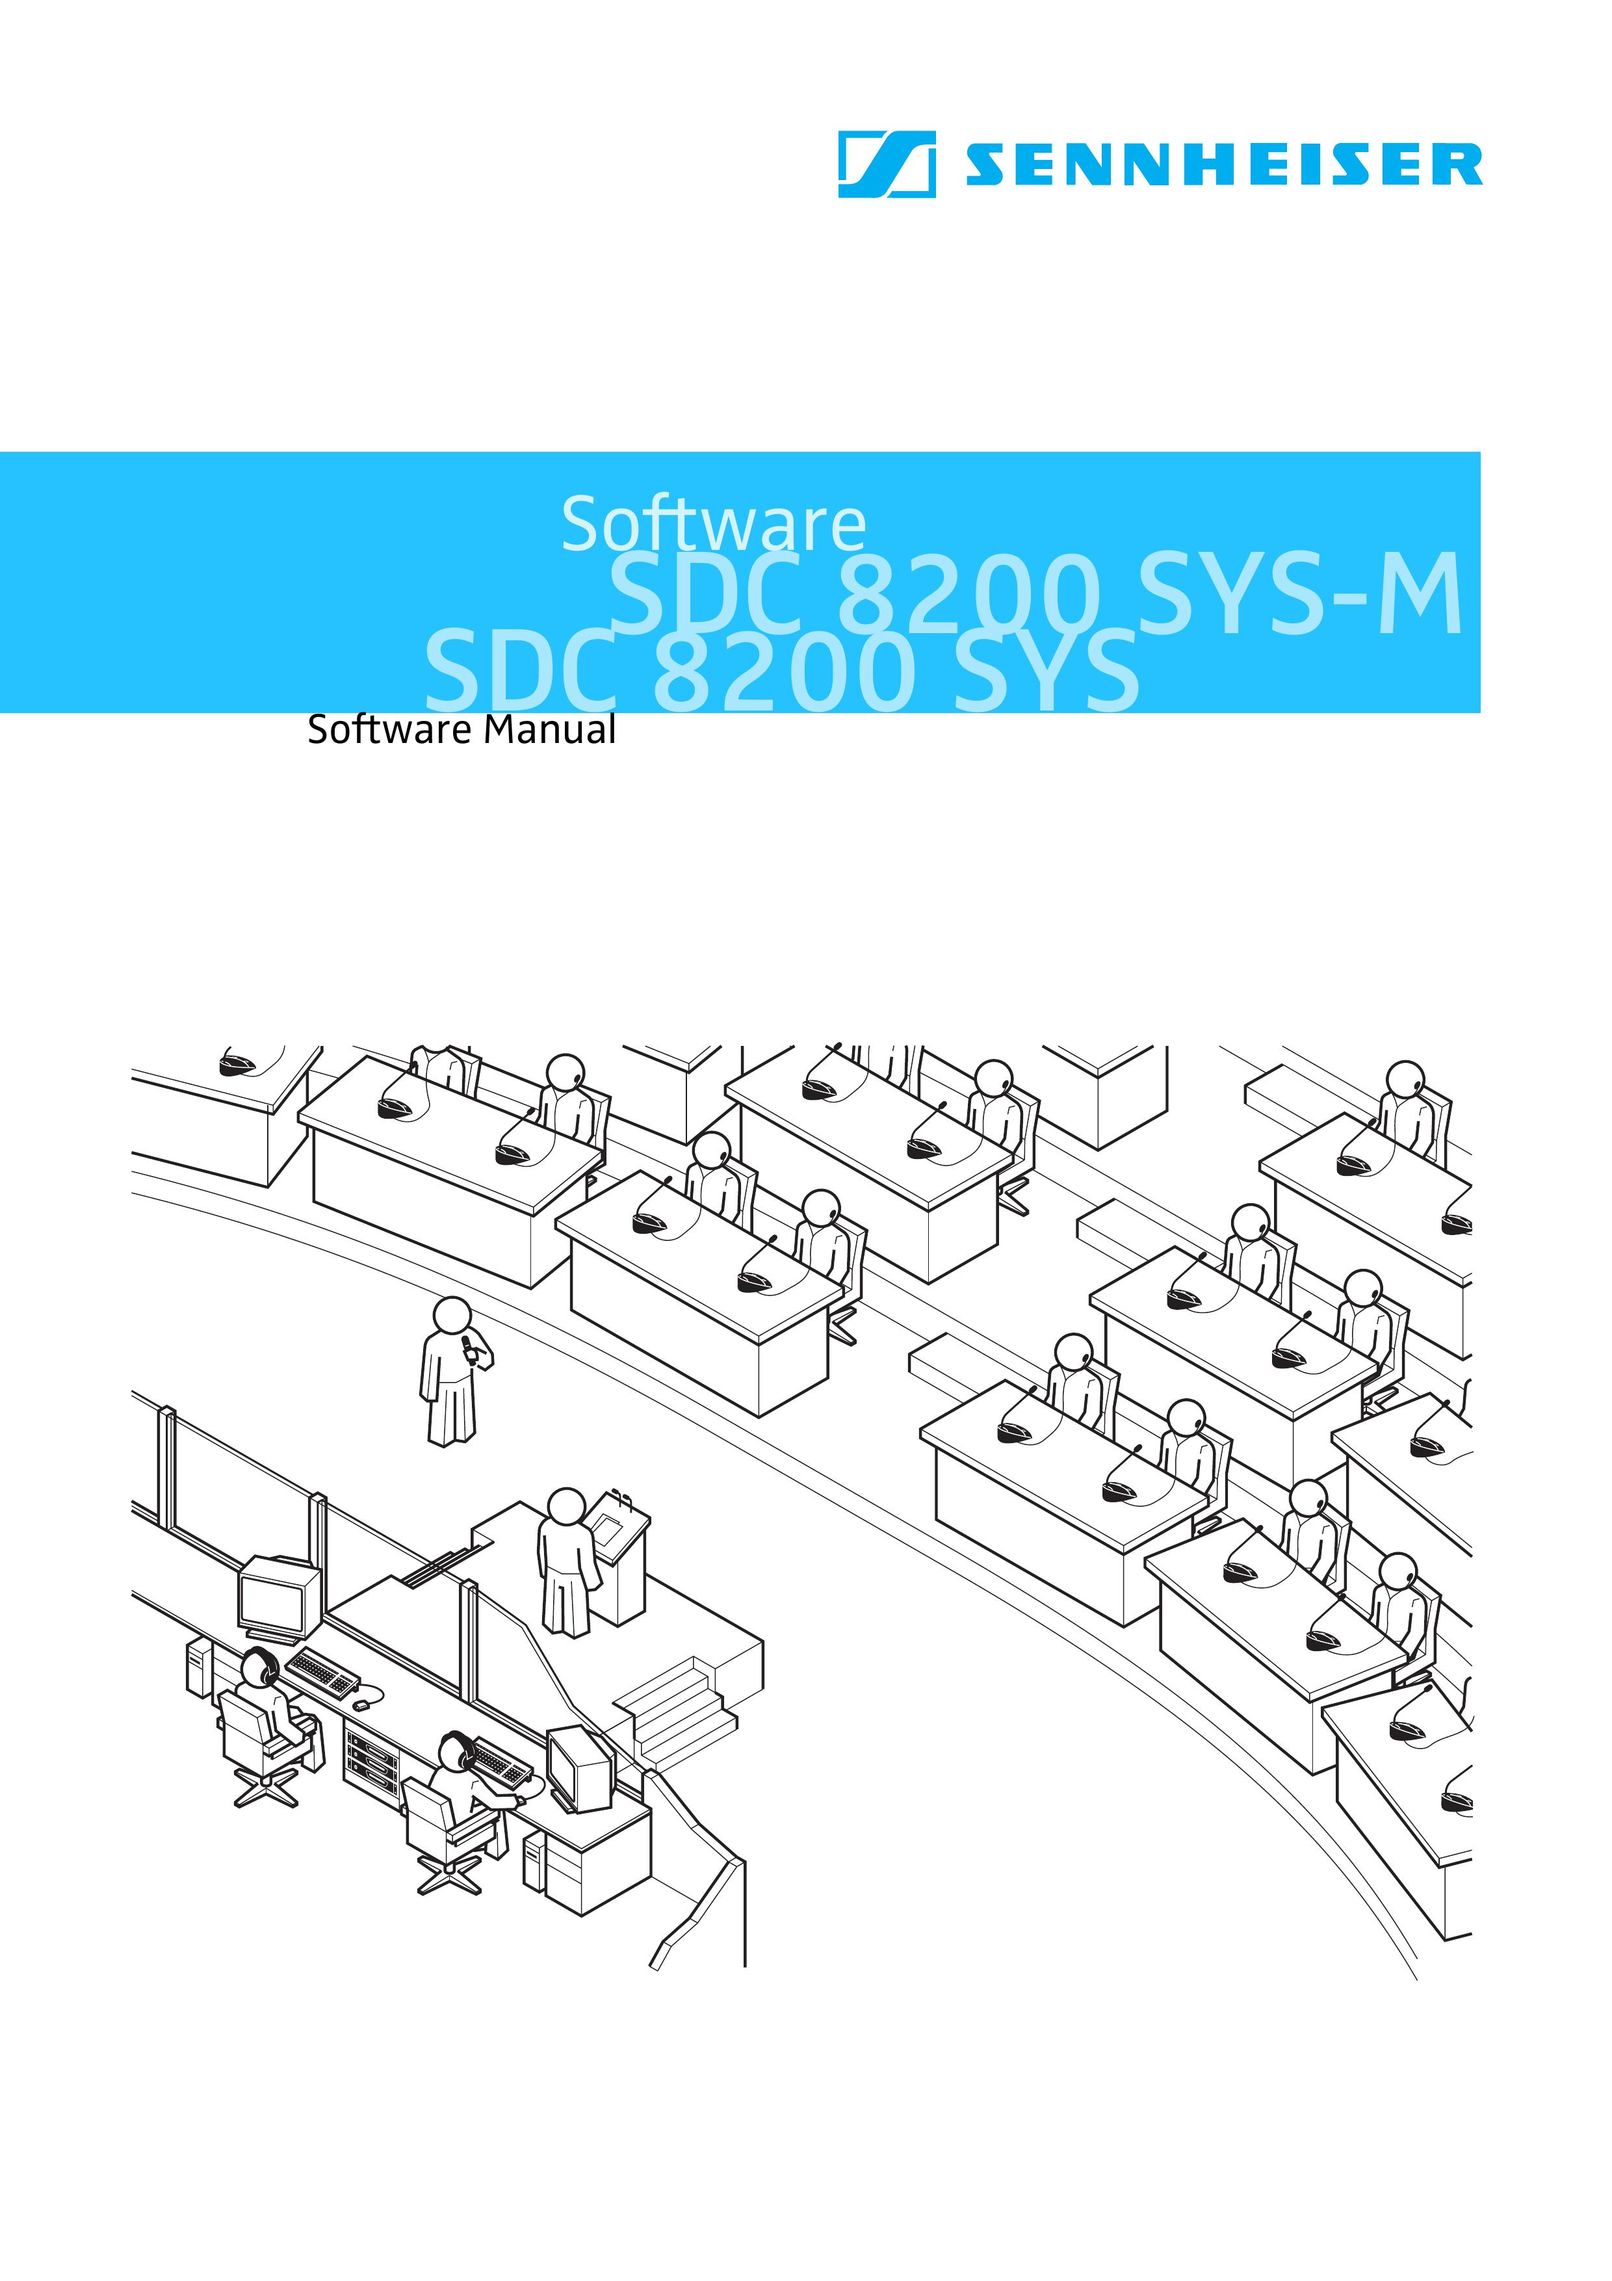 Sennheiser SDC 8200 SYS-M Water System User Manual